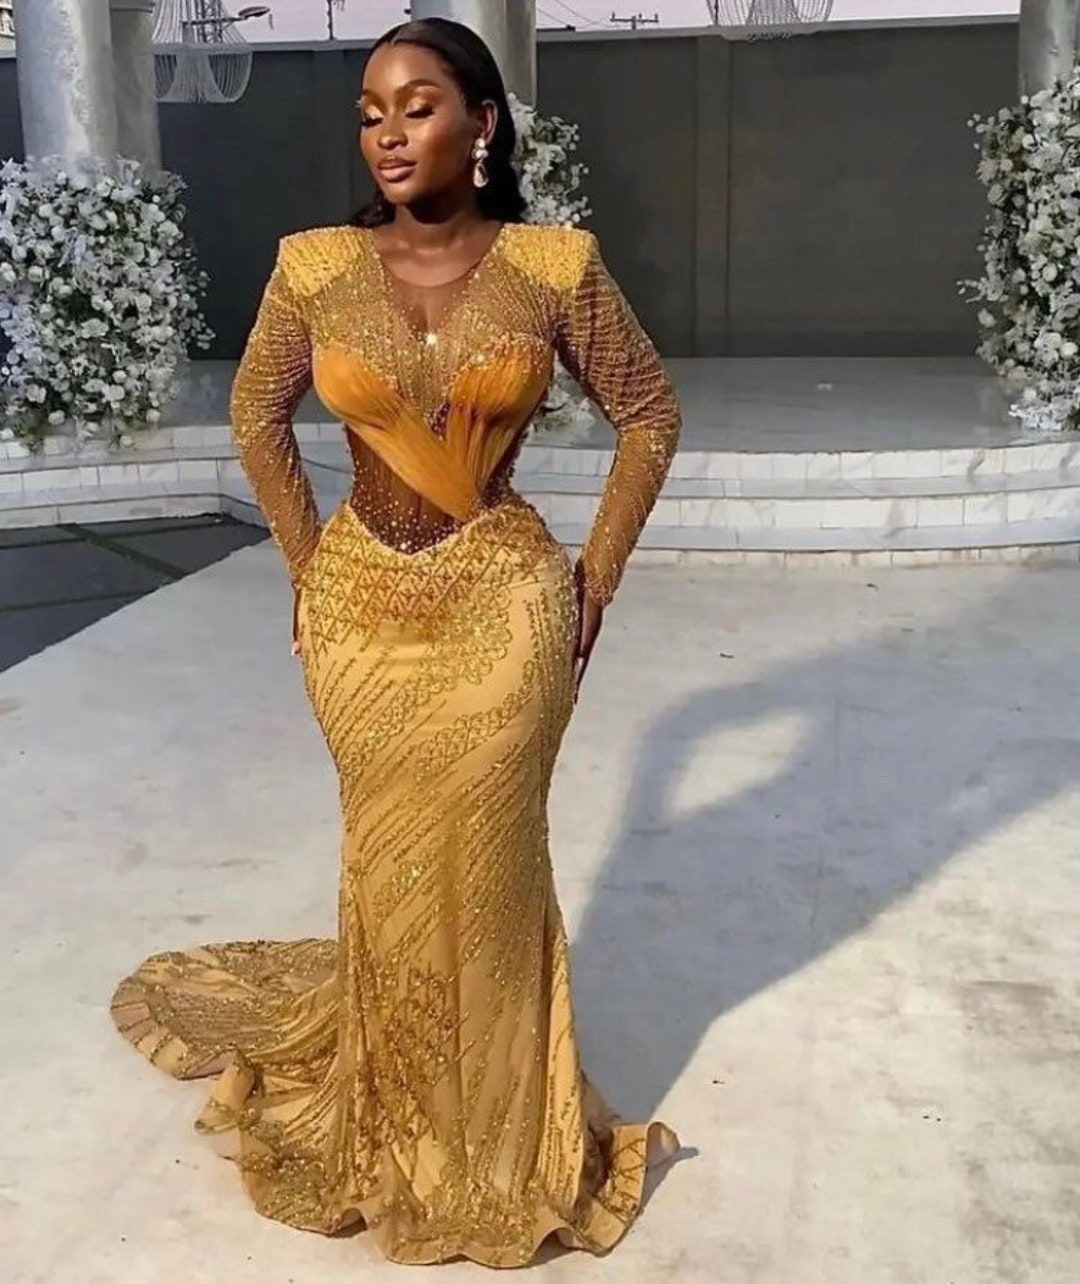 Details more than 137 gold dresses for women super hot